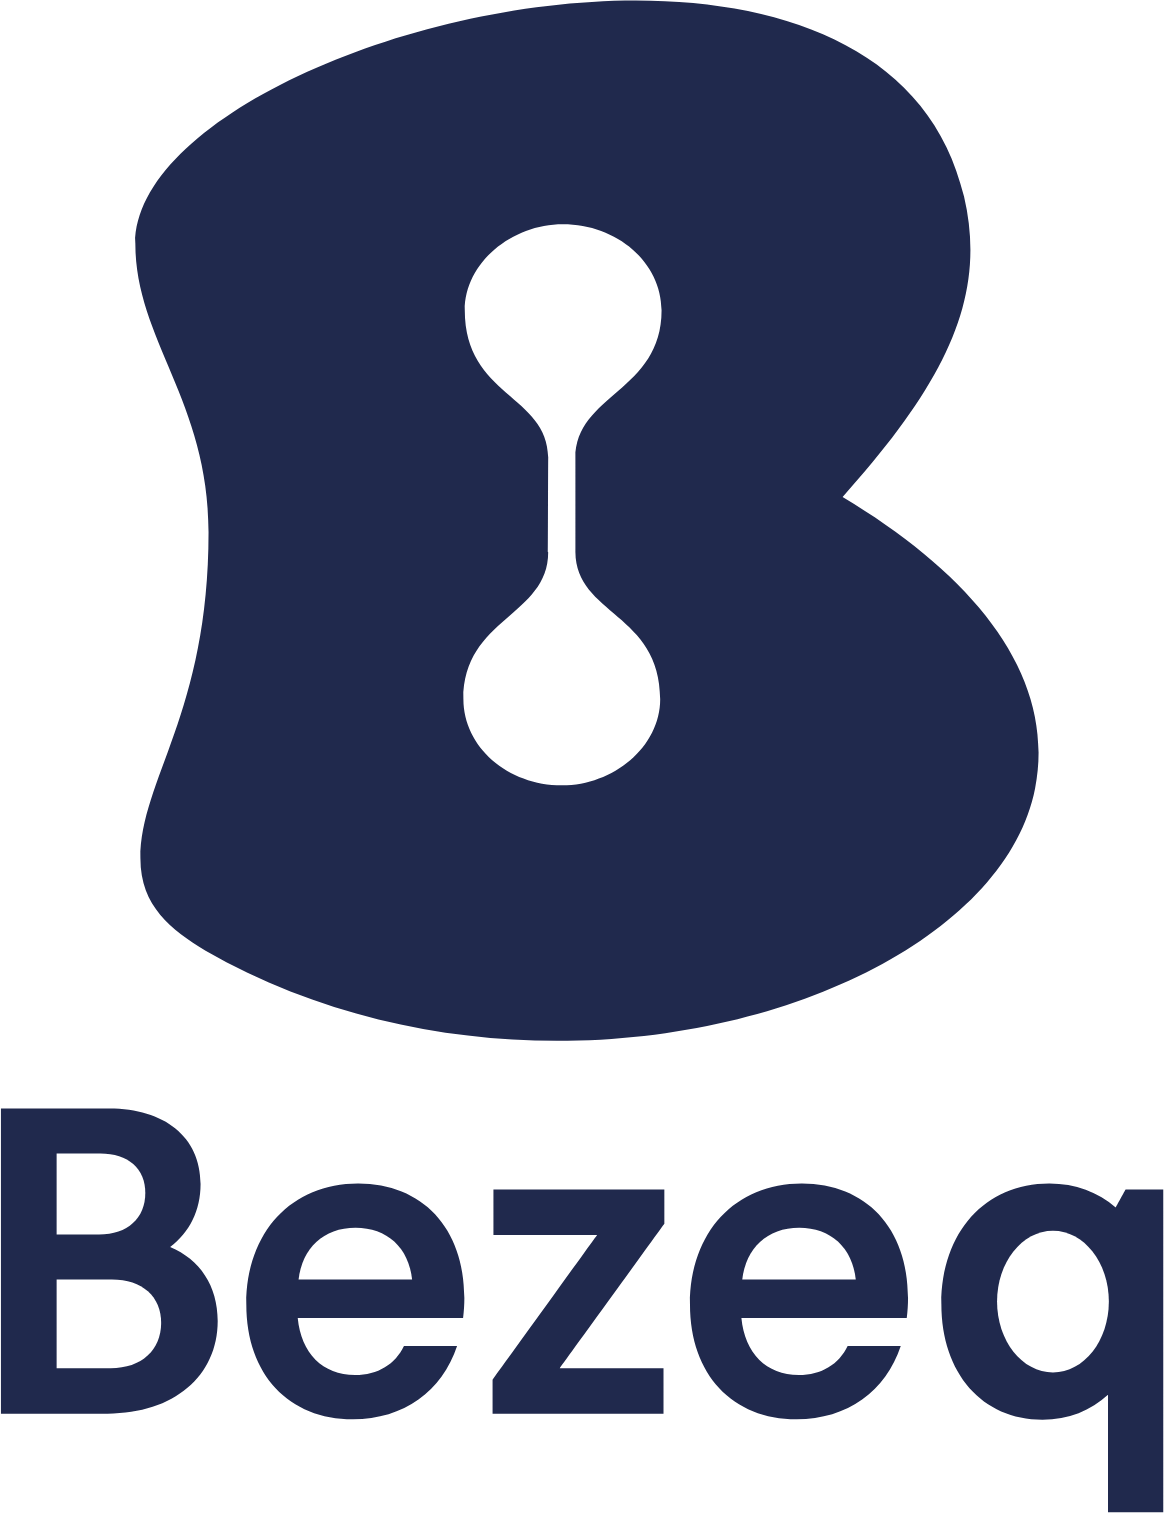 Bezeq logo large (transparent PNG)